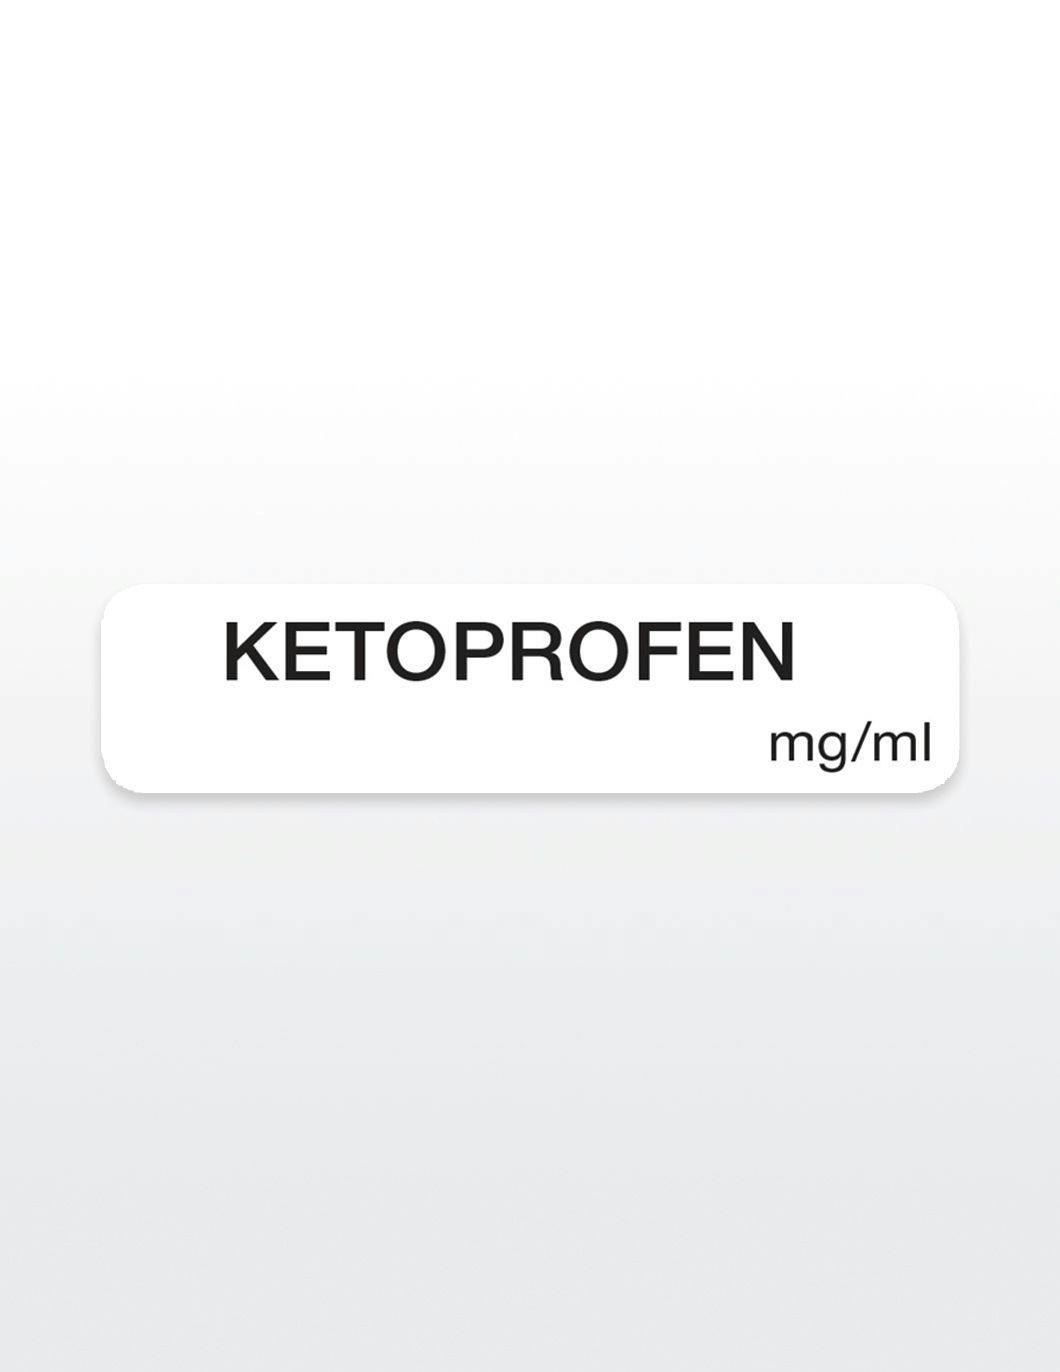 ketoprofen-drug-syringe-stickers